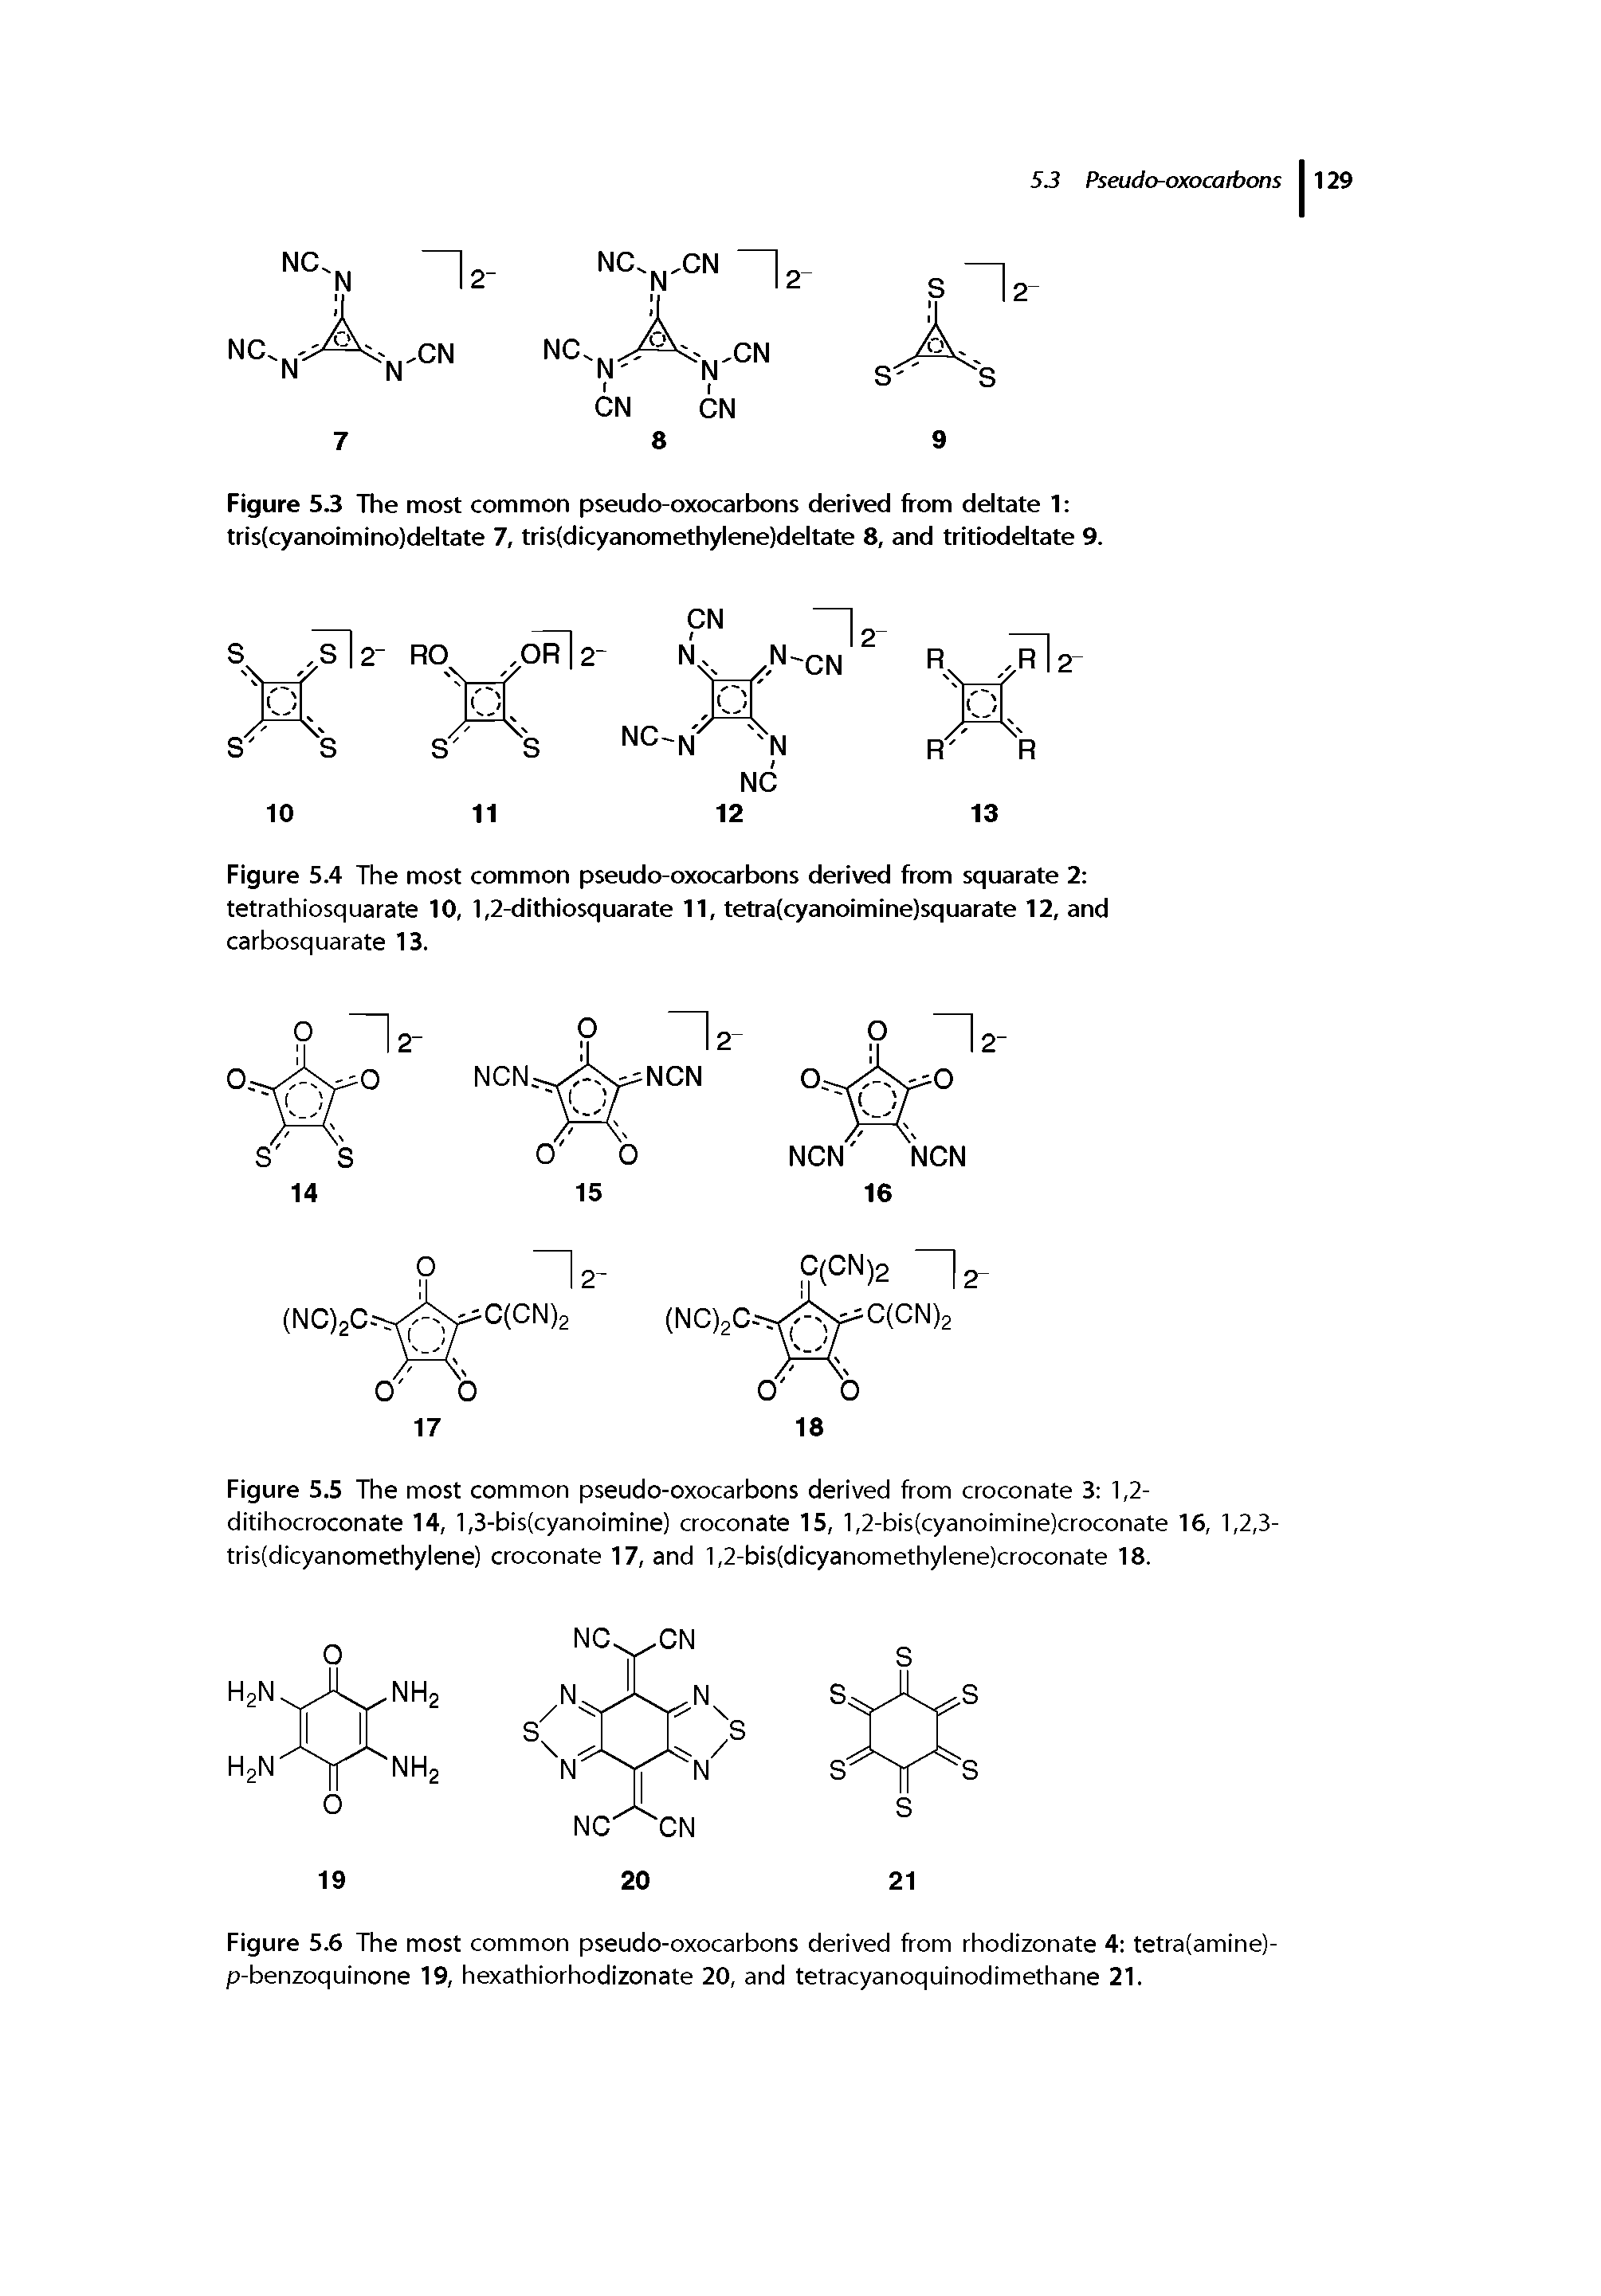 Figure 5.6 The most common pseudo-oxocarbons derived from rhodizonate 4 tetra(amine)-p-benzoquinone 19, hexathiorhodizonate 20, and tetracyanoquinodimethane 21.